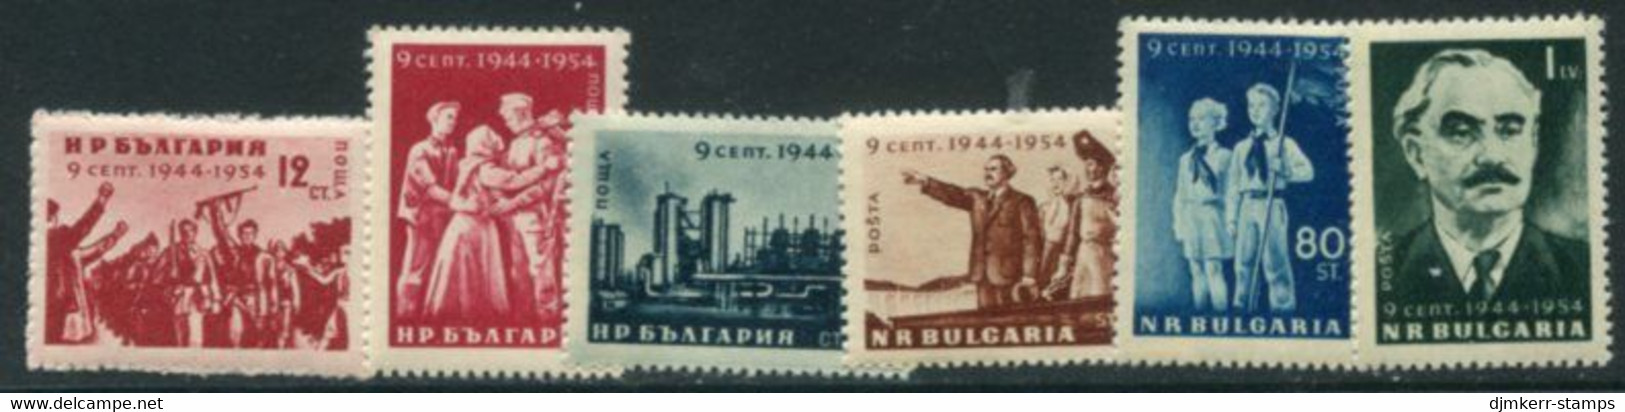 BULGARIA 1954 Liberation Anniversary MNH / ** .  Michel 921-26 - Nuevos